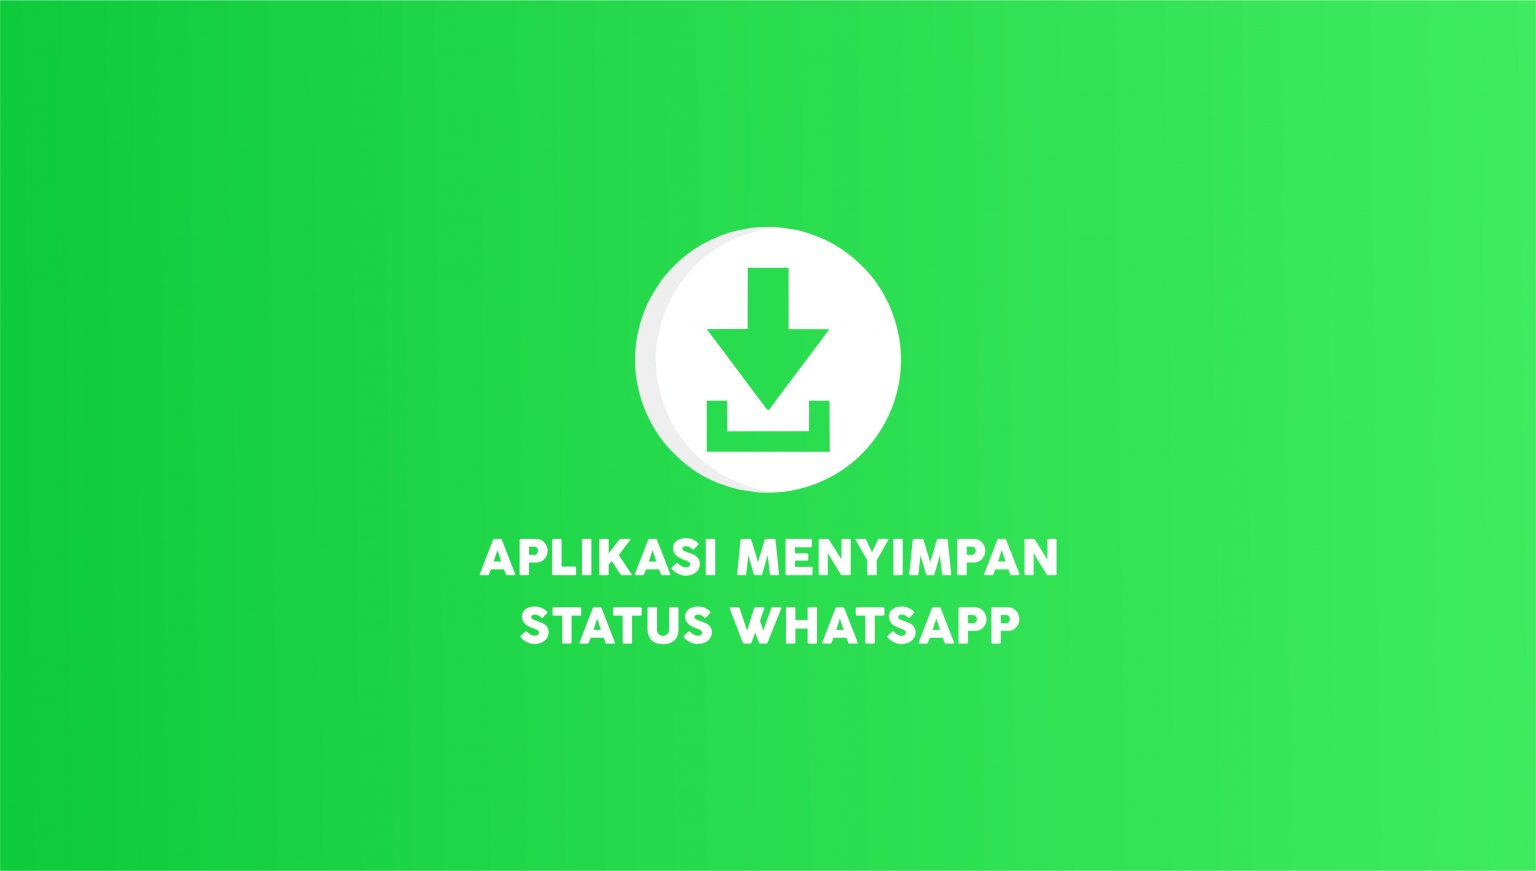 8 Aplikasi Menyimpan Status WhatsApp yang Wajib Dicoba